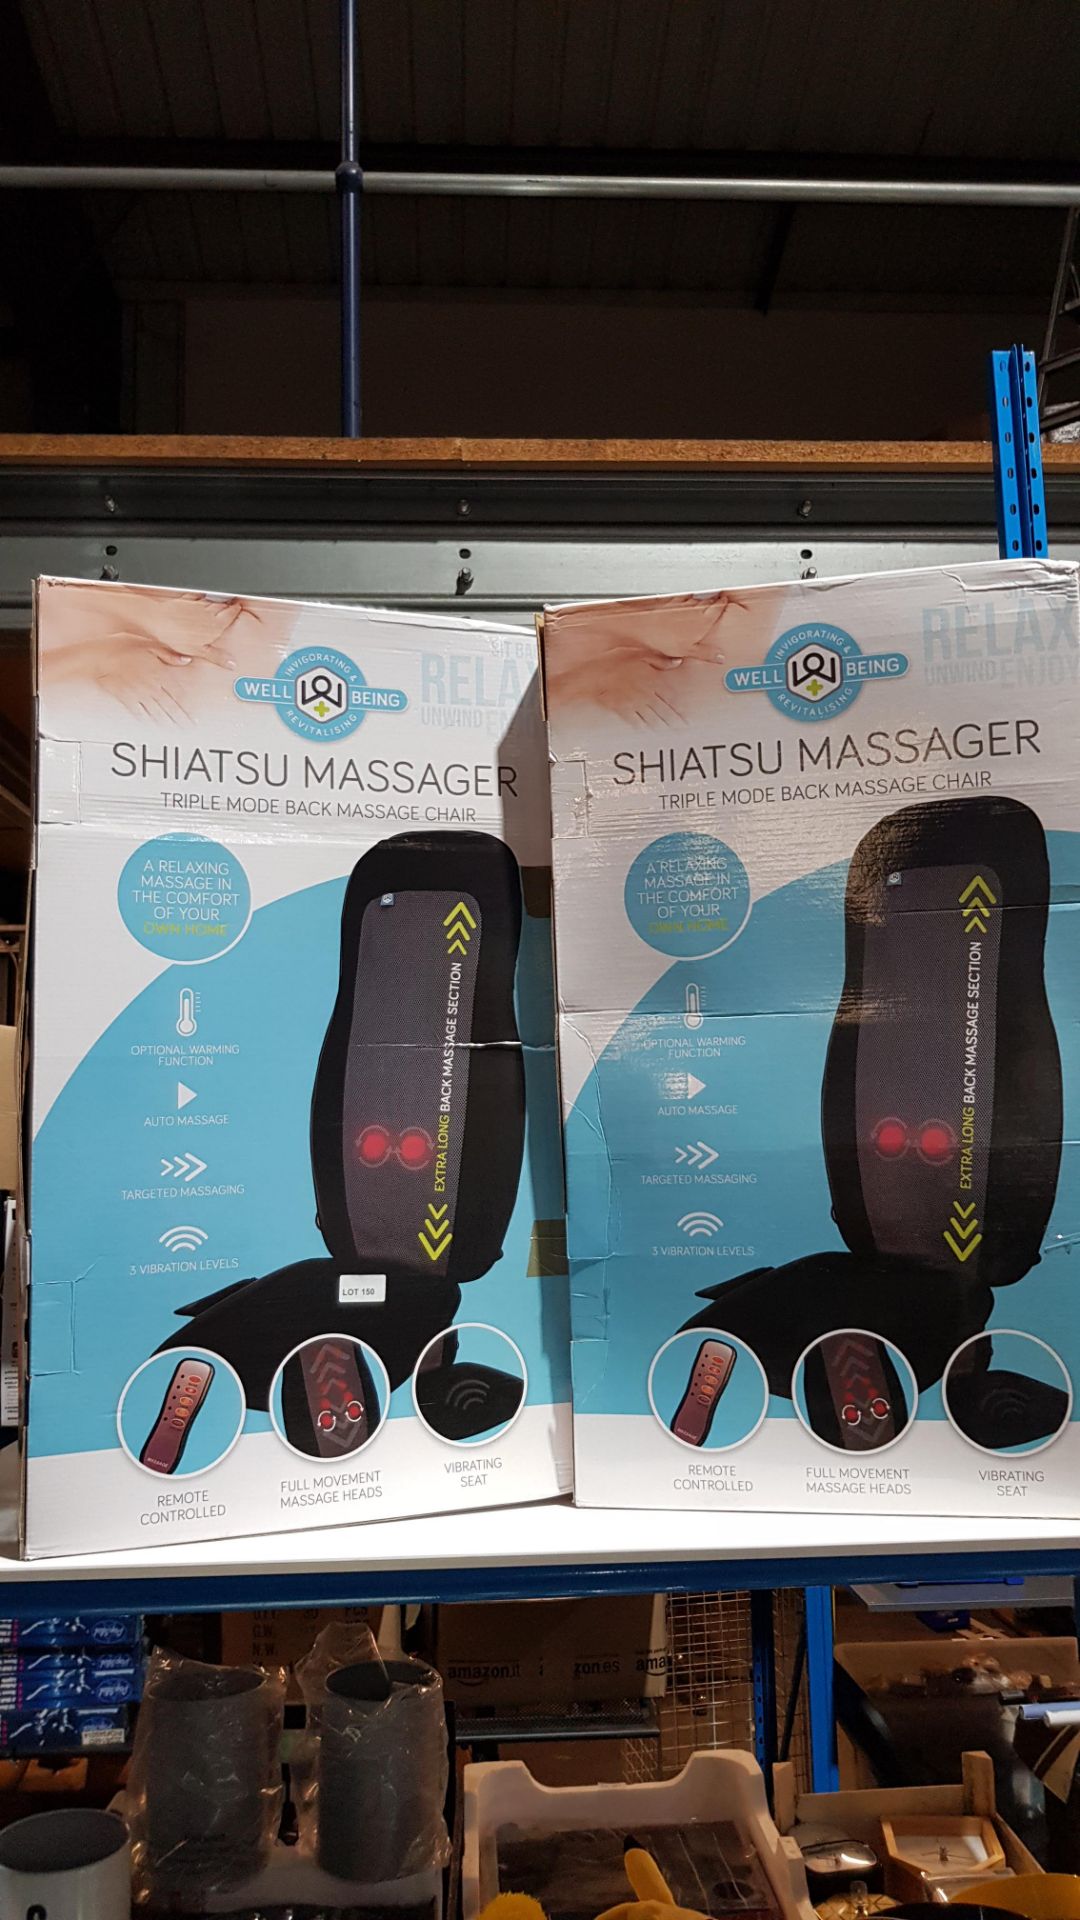 (R1K) Health. 2 X Well Being Shiatsu Massager Triple Mode Back Massage Chair